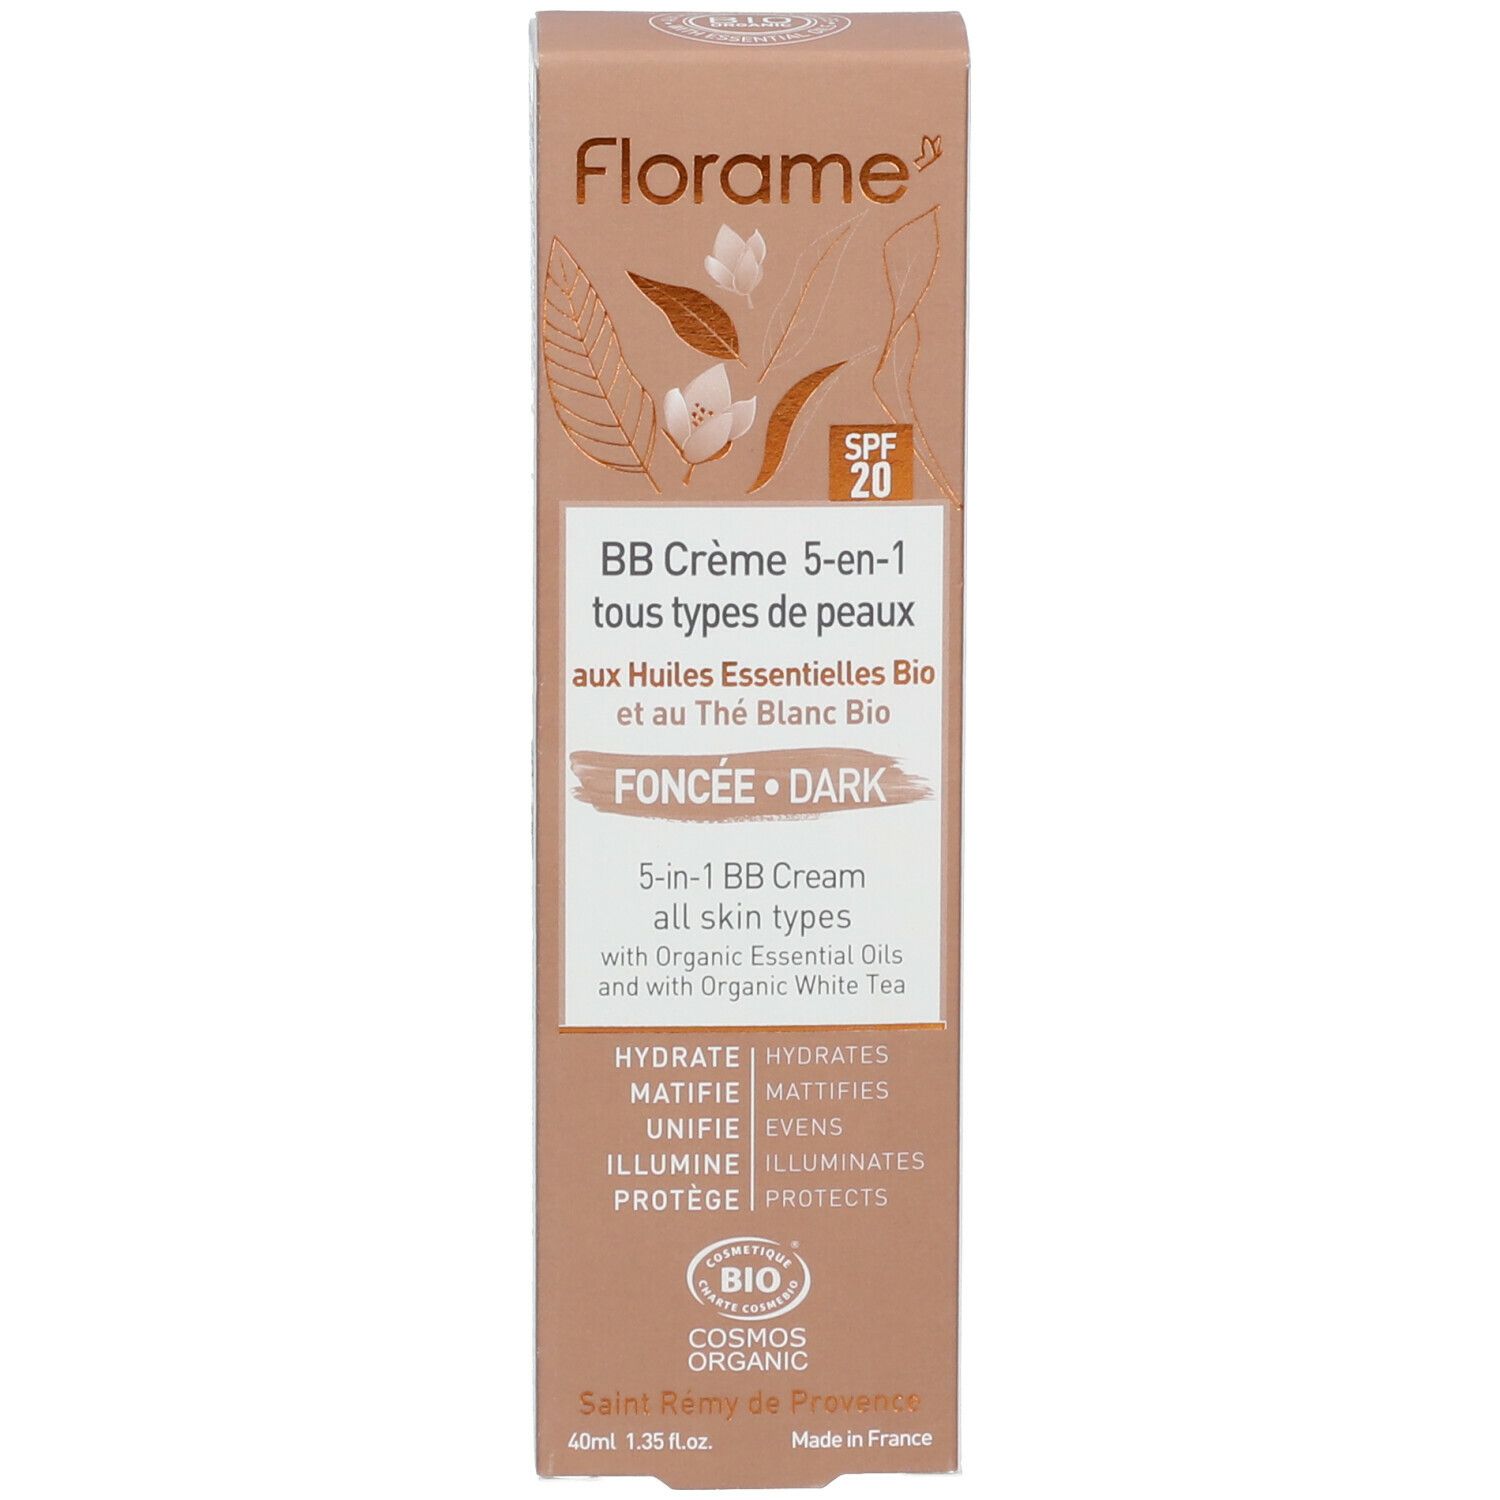 Florame BB Creme 5-in-1 Dunkel